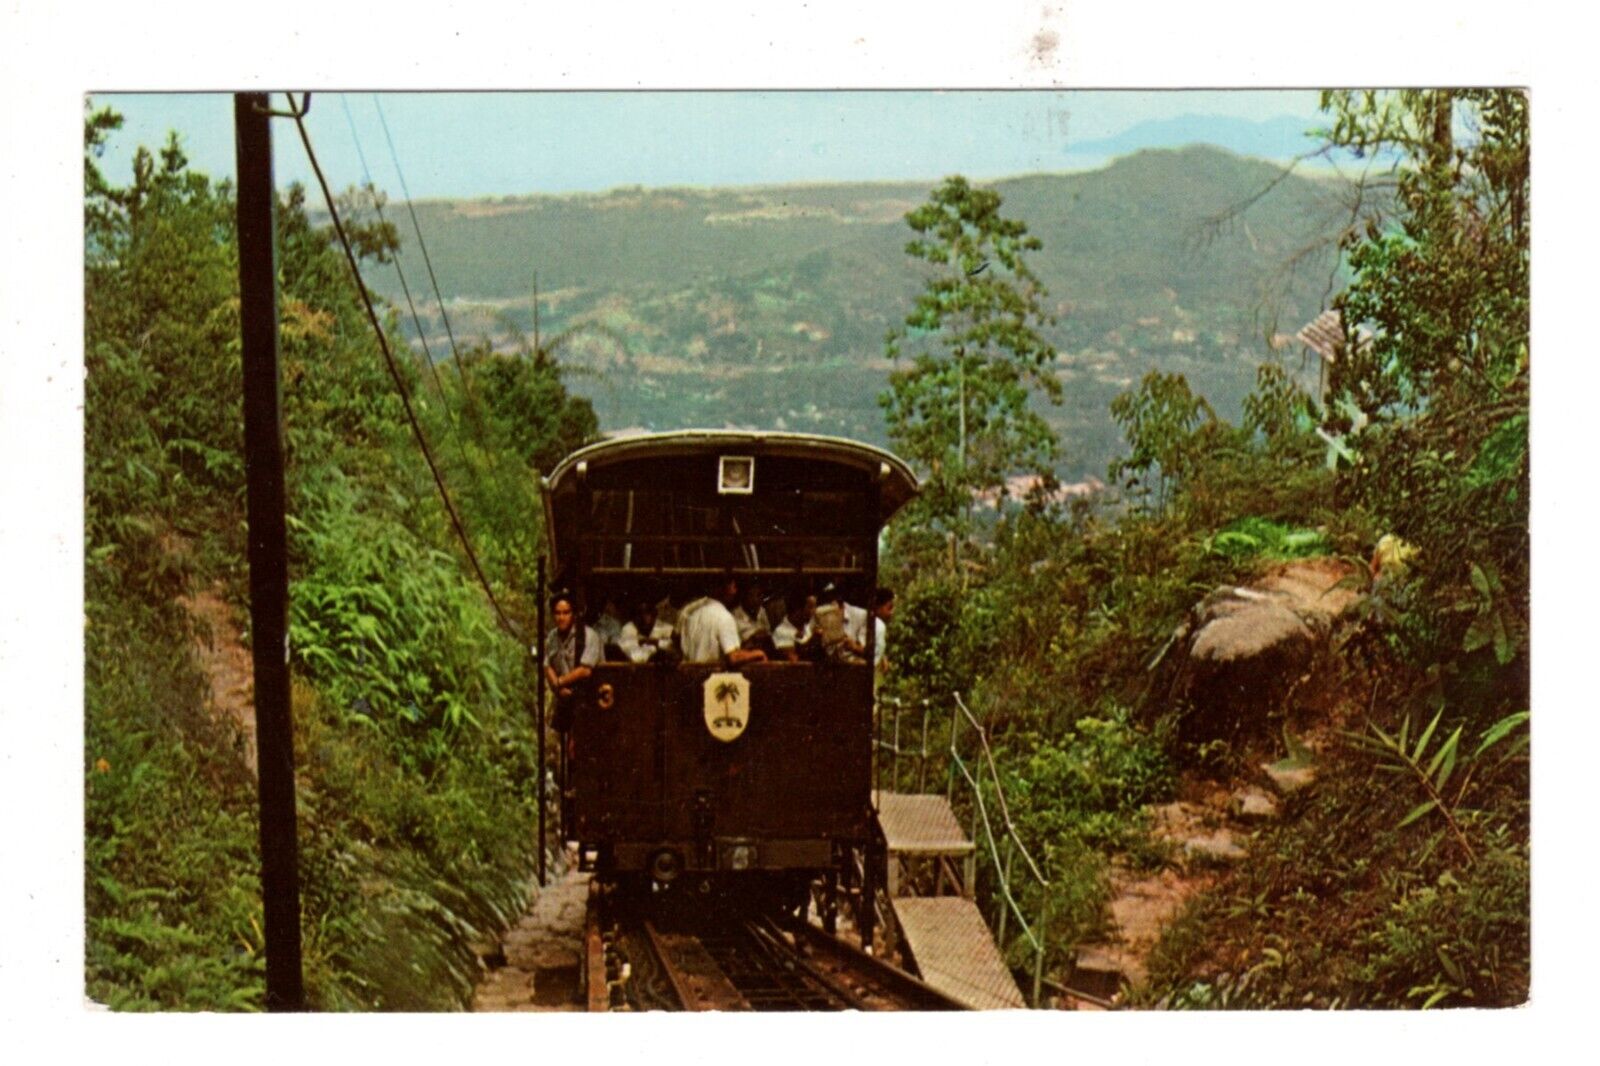 Penang, Malaysia   Penang Hill Funicular Railway  @ 1960